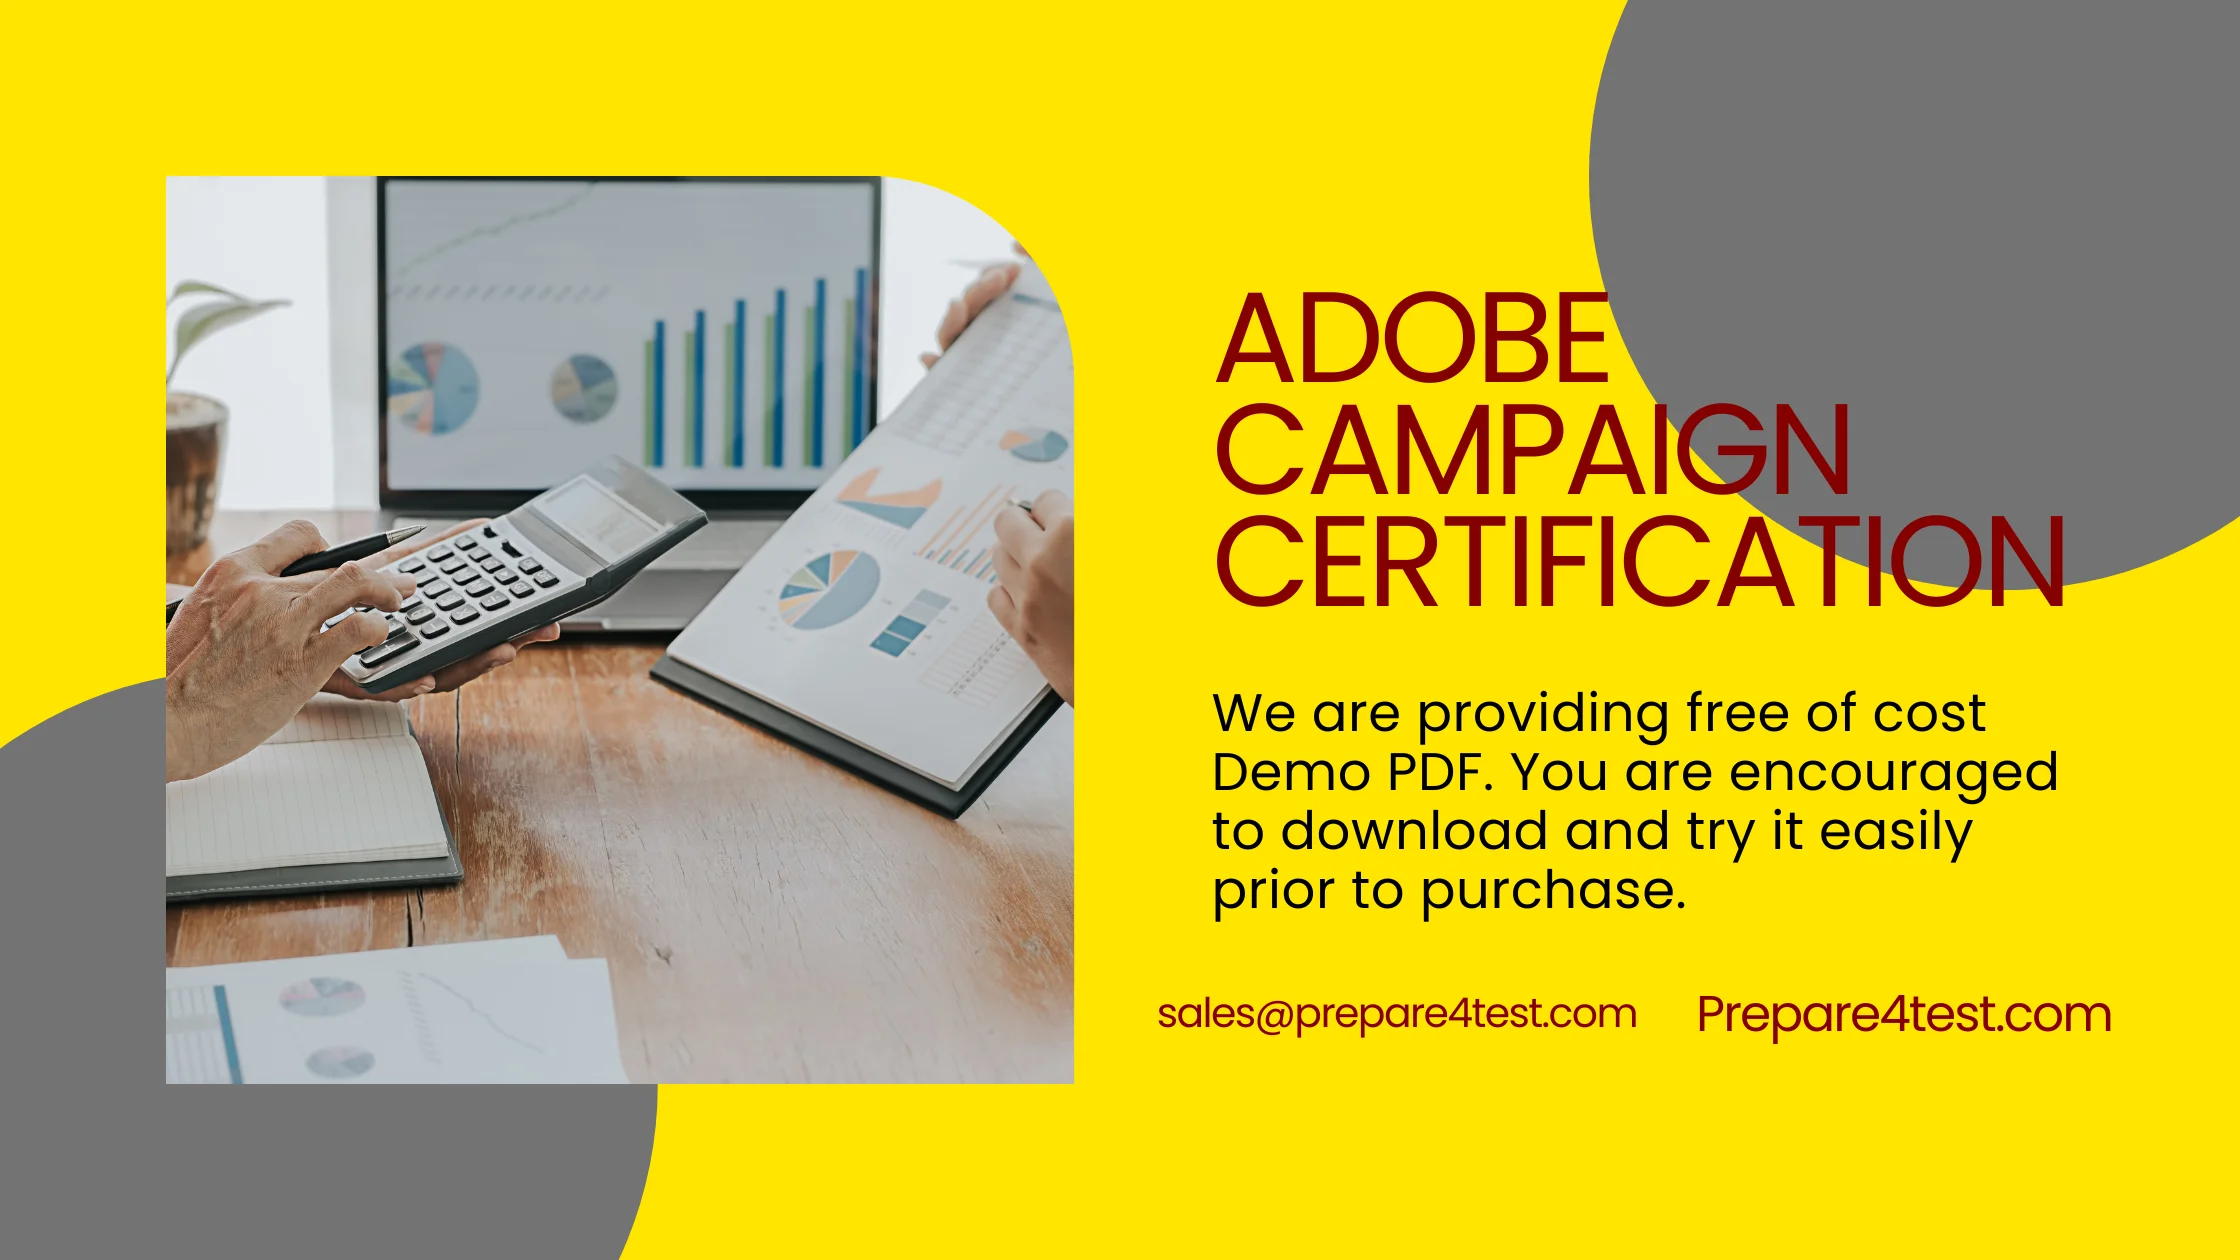 Adobe Campaign Certification